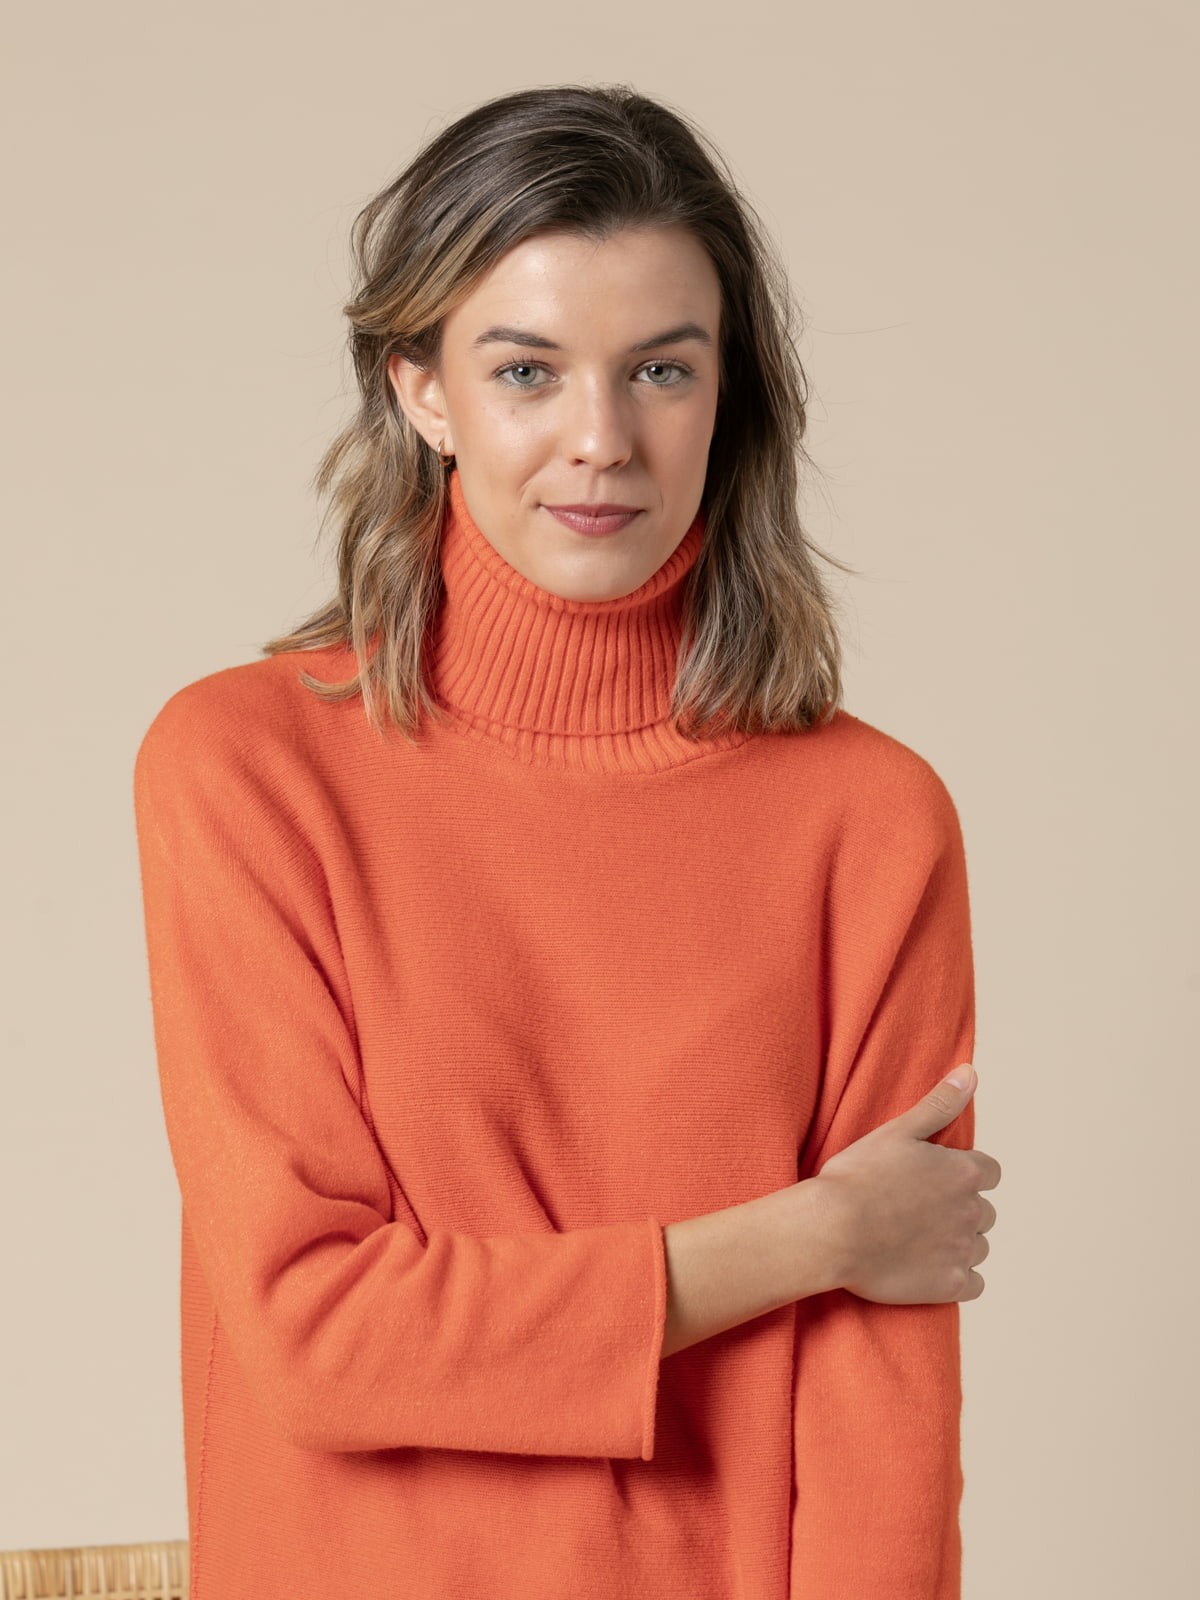 Woman Basic high neck cashmere touch sweater  Orangecolour